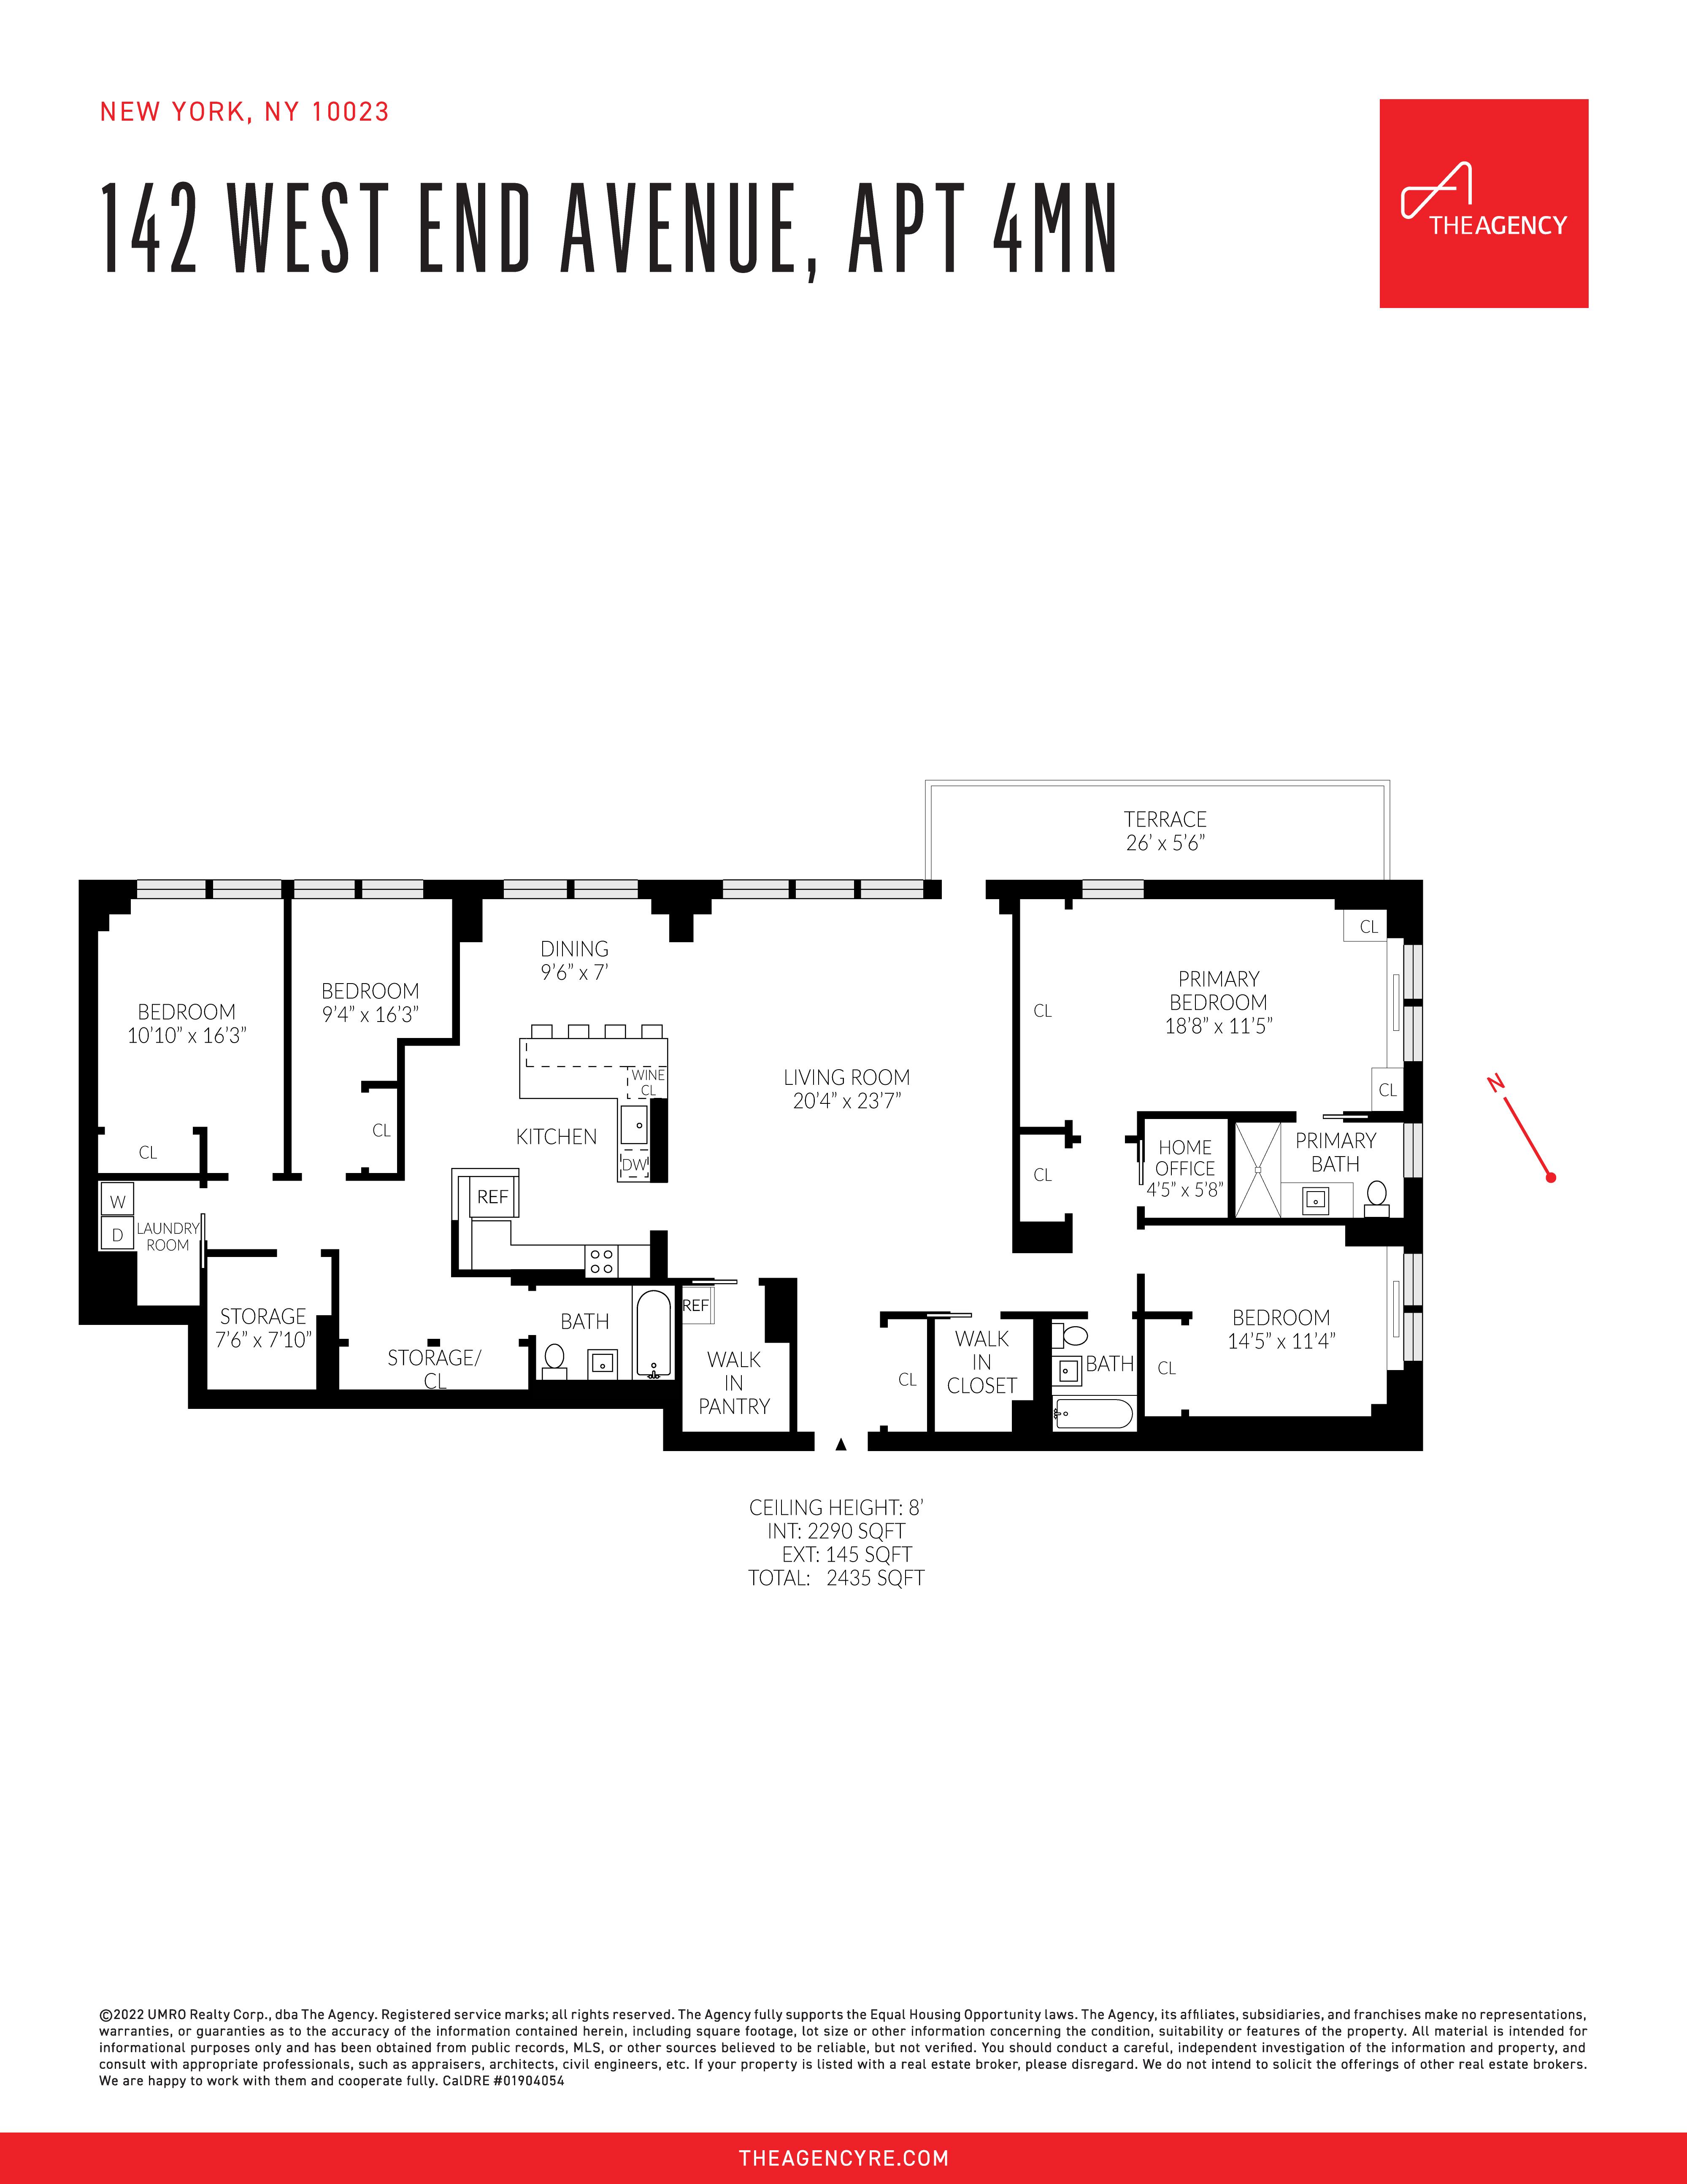 Floorplan for 142 West End Avenue, 4-MN